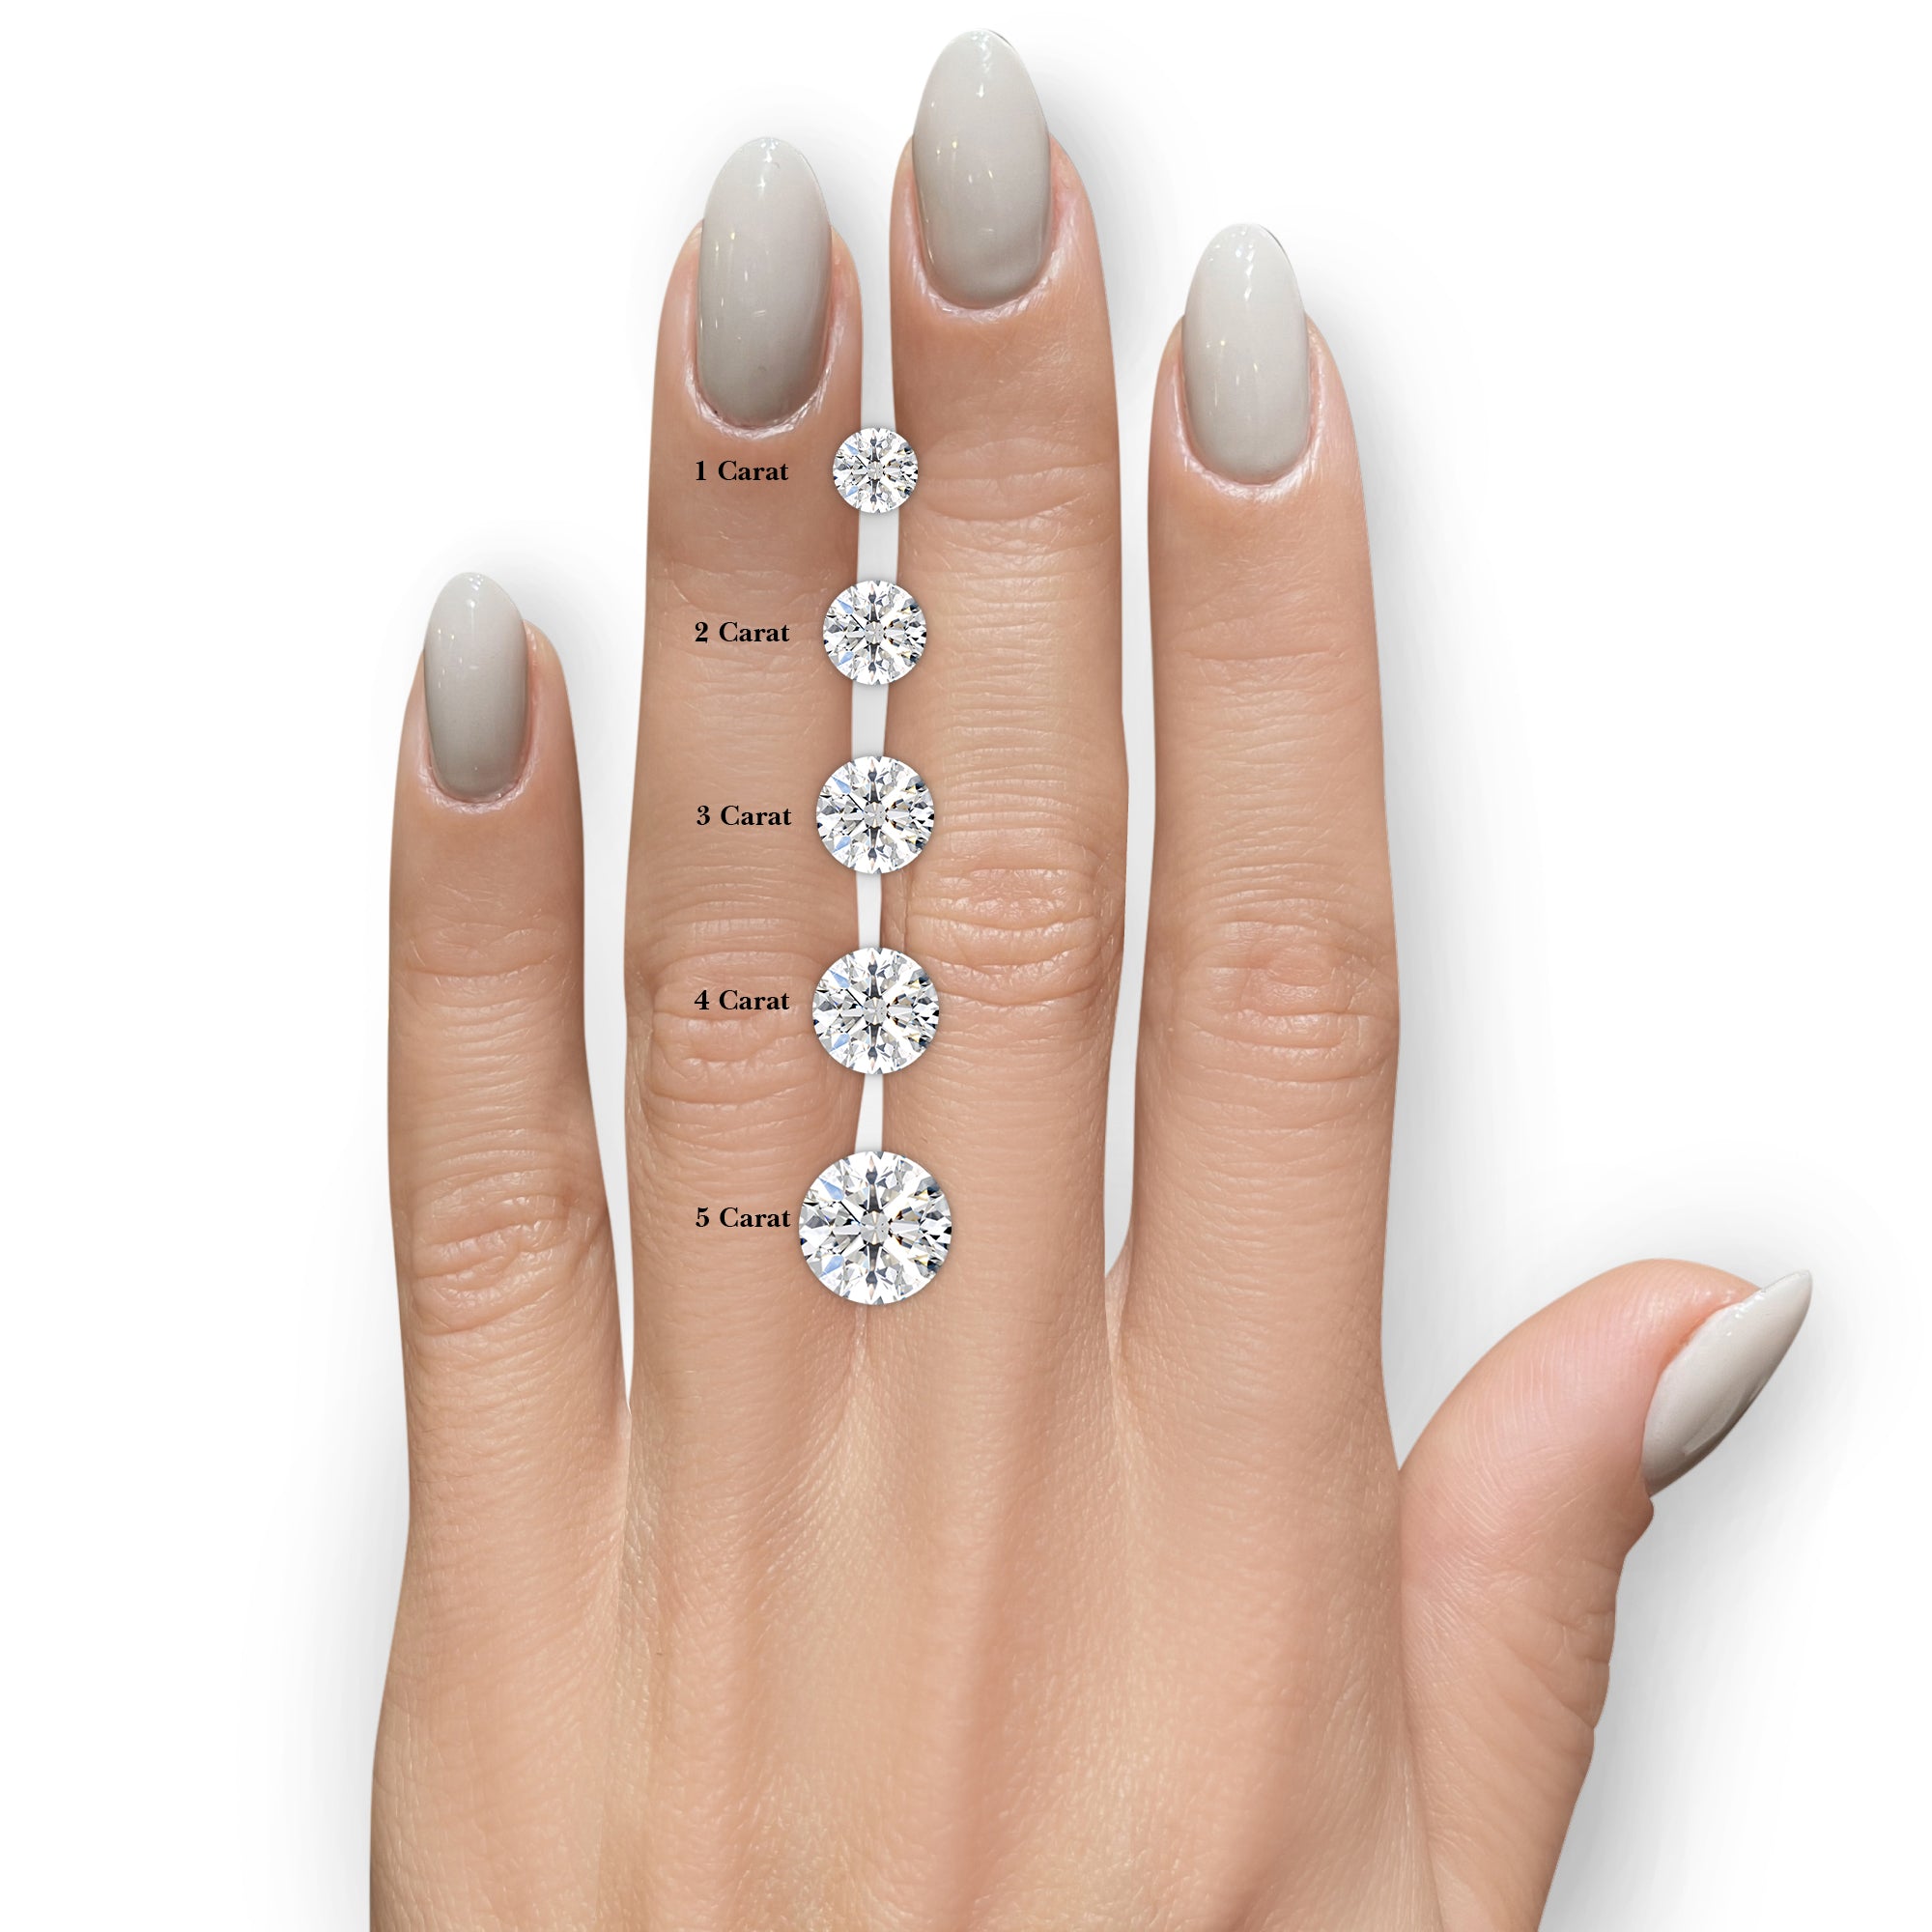 Nellie Lab Grown Diamond Ring -14K White Gold